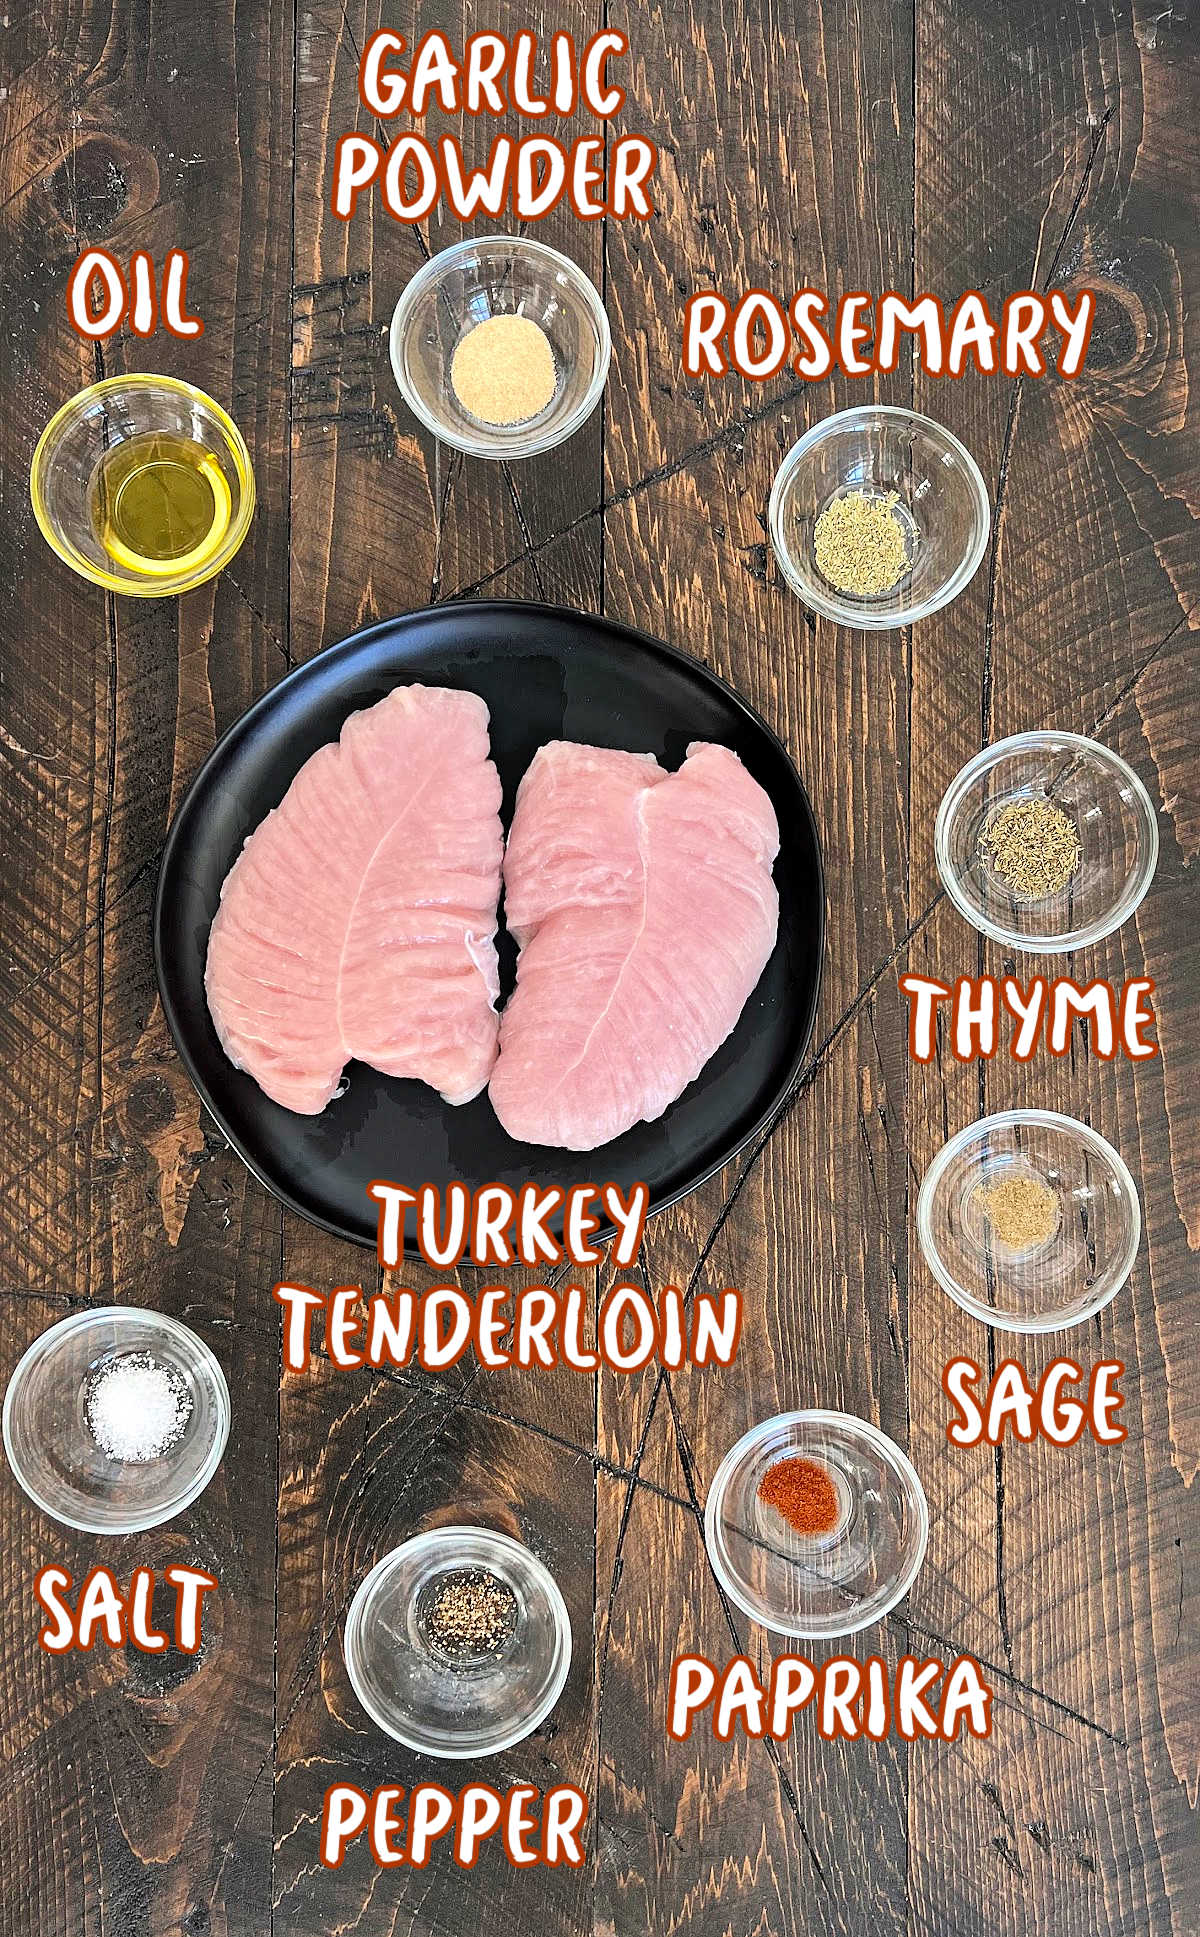 Air fryer turkey tenderloin ingredients. 